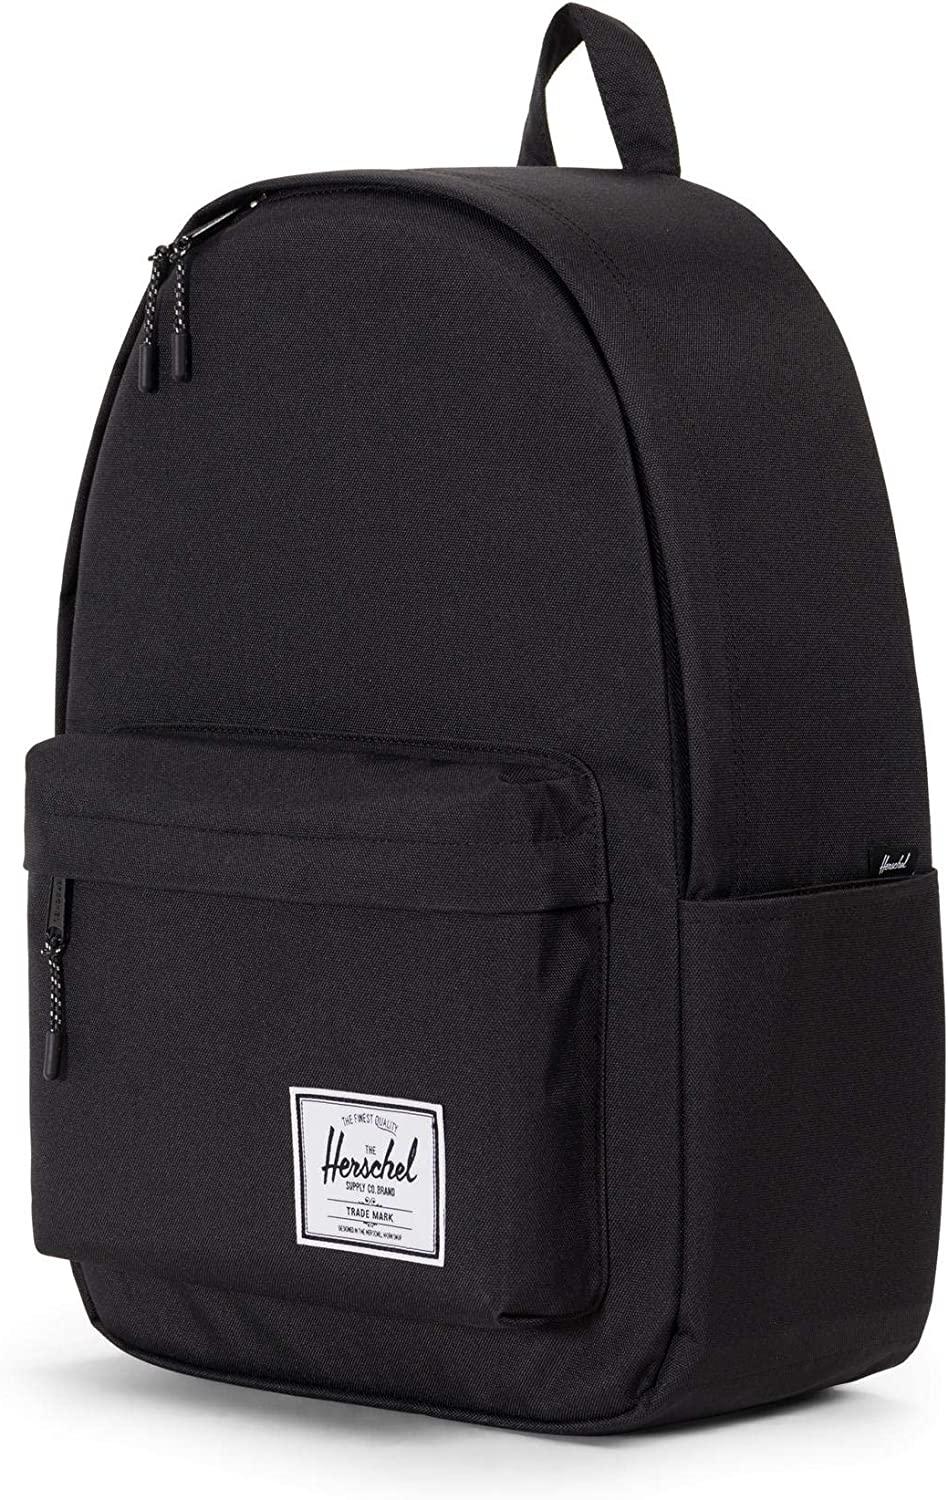 Herschel Classic Backpack, Black, XL 30.0L XL 30.0L Black